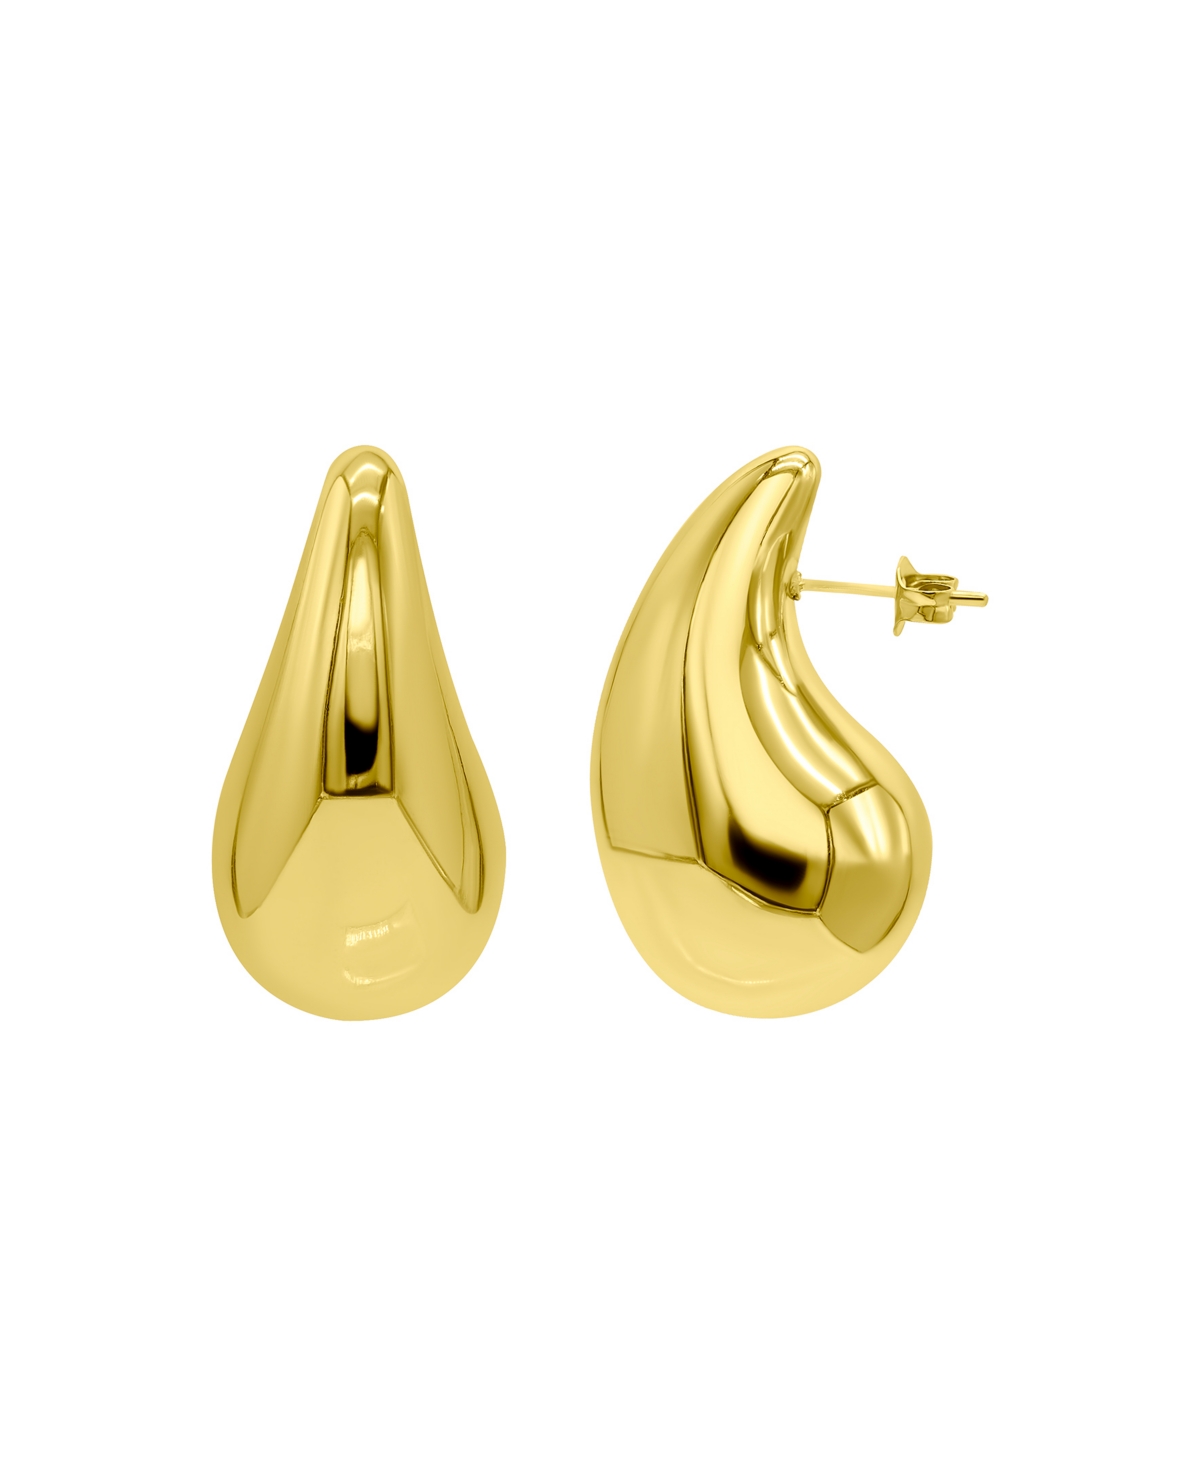 Tarnish Resistant 14K Gold-Plated Teardrop Sculptural Stud Earrings - Gold